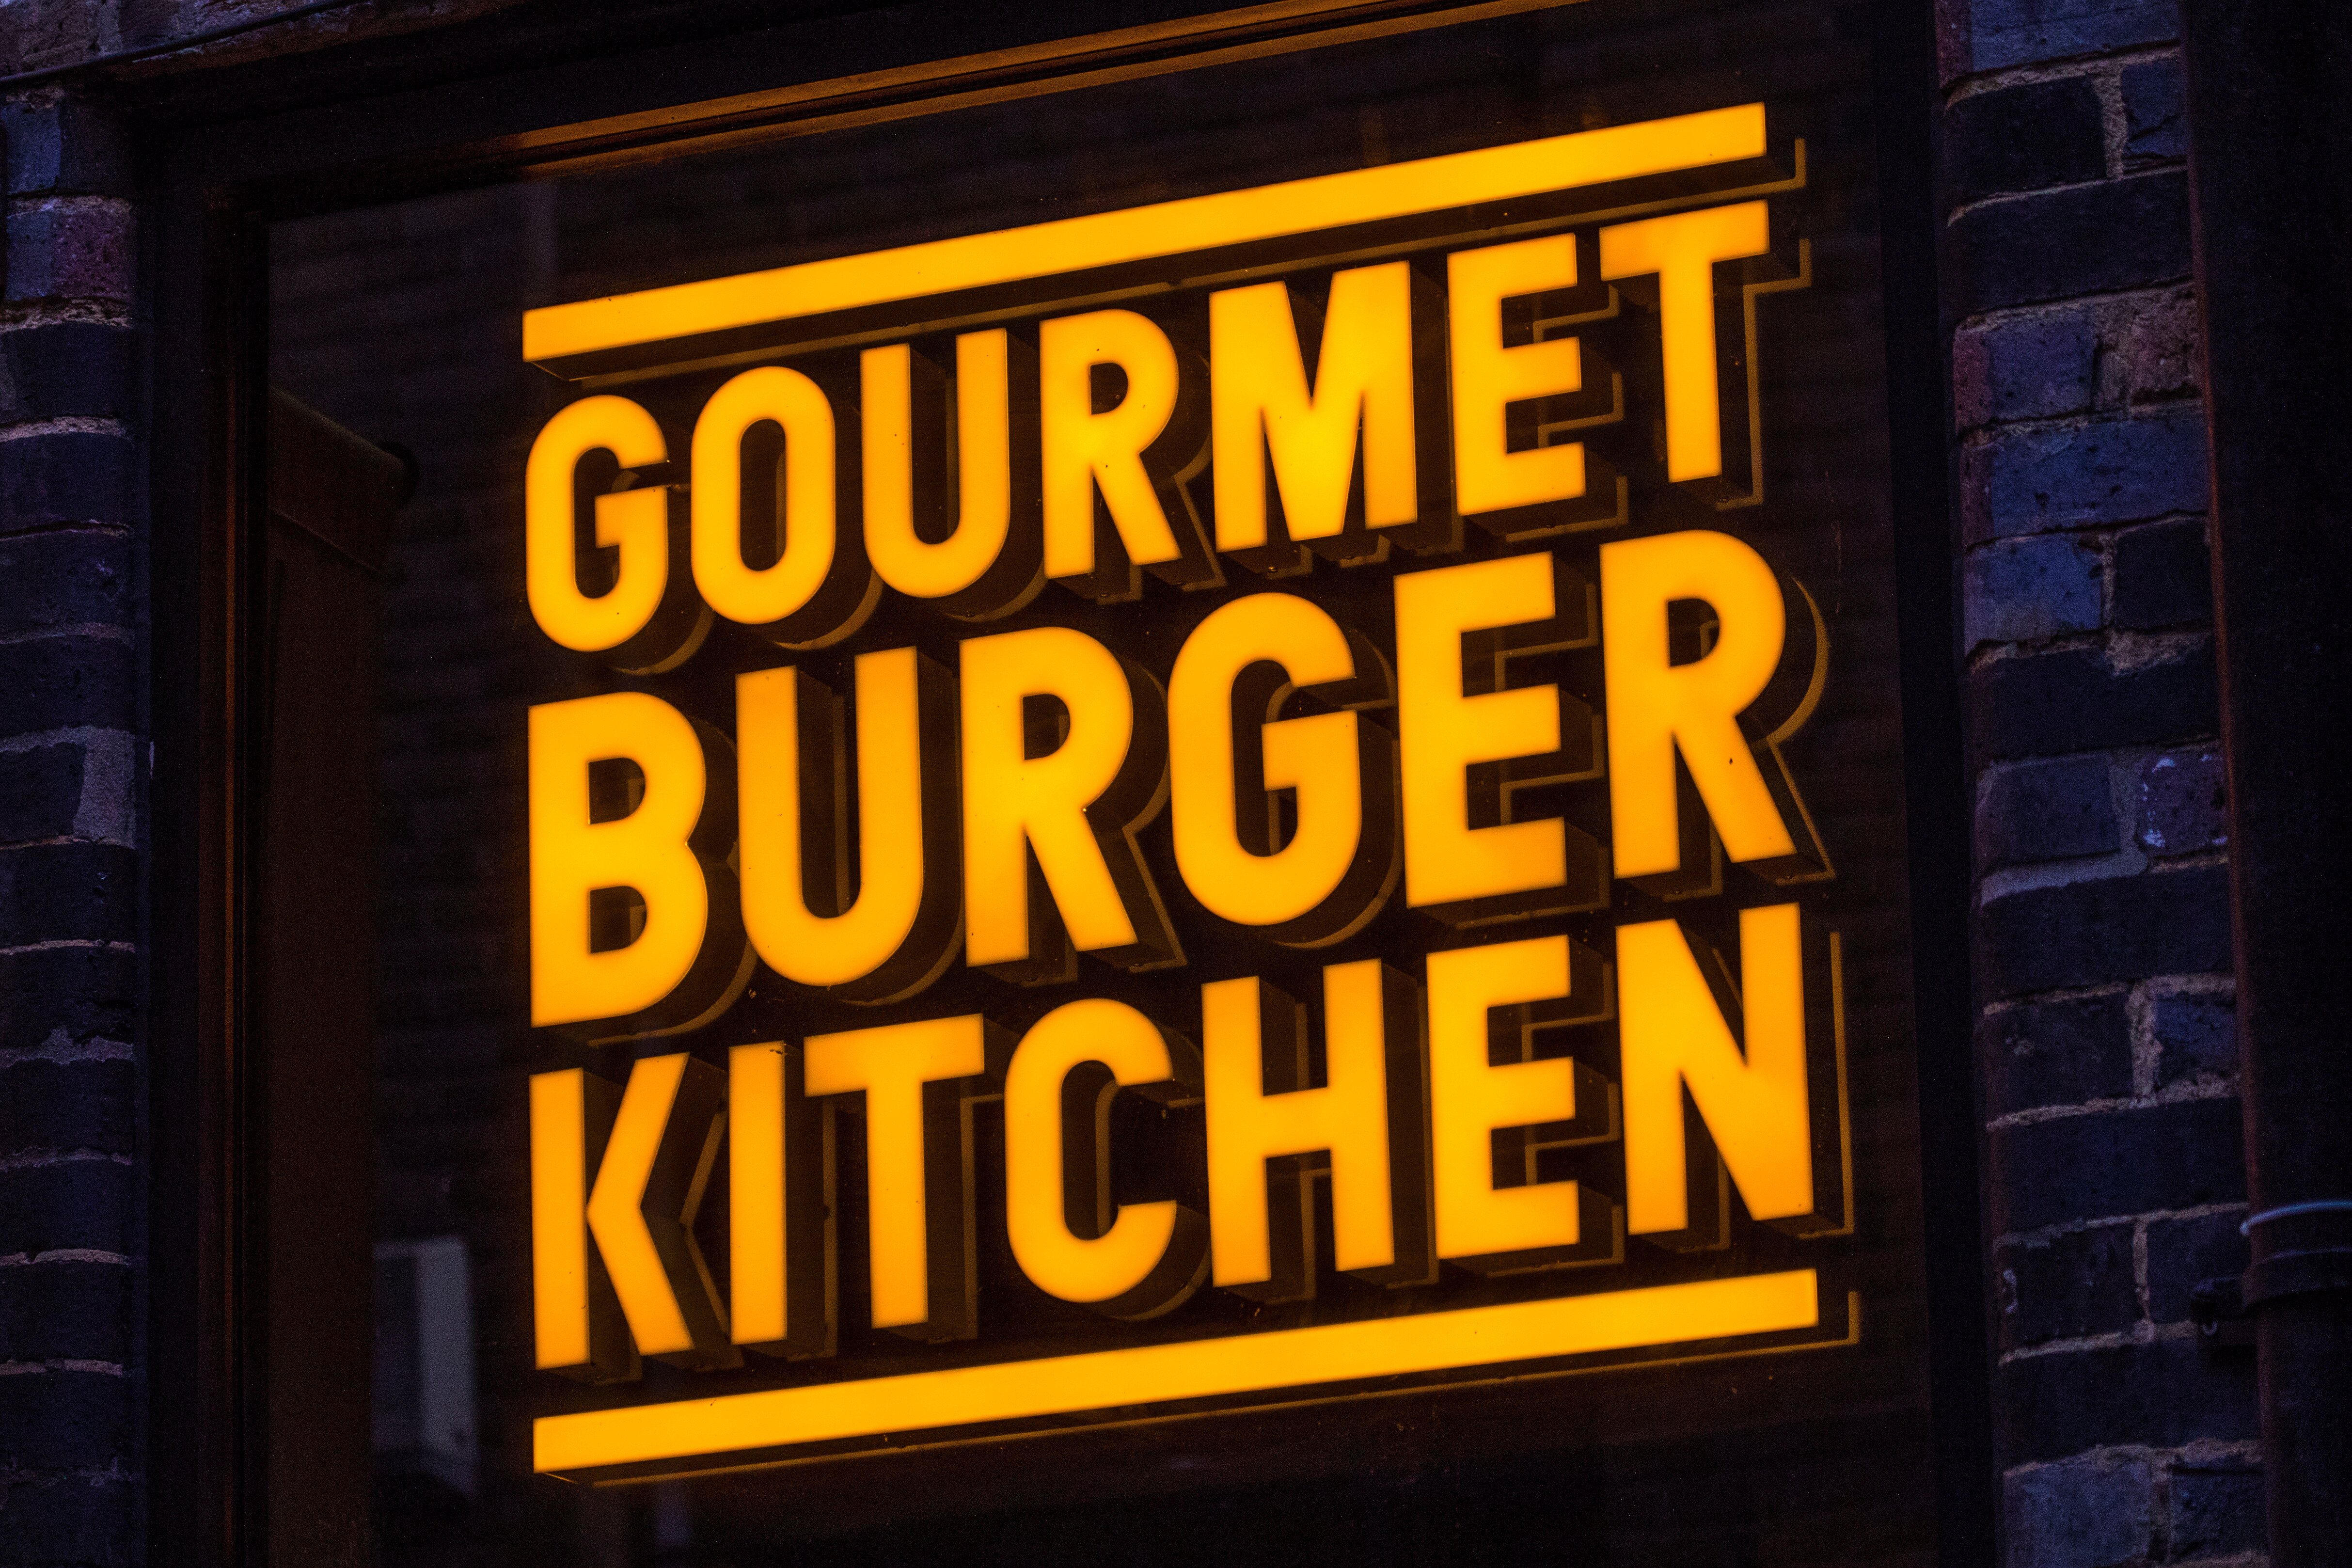 Boparan believed to be eyeing Gourmet Burger Kitchen buyout